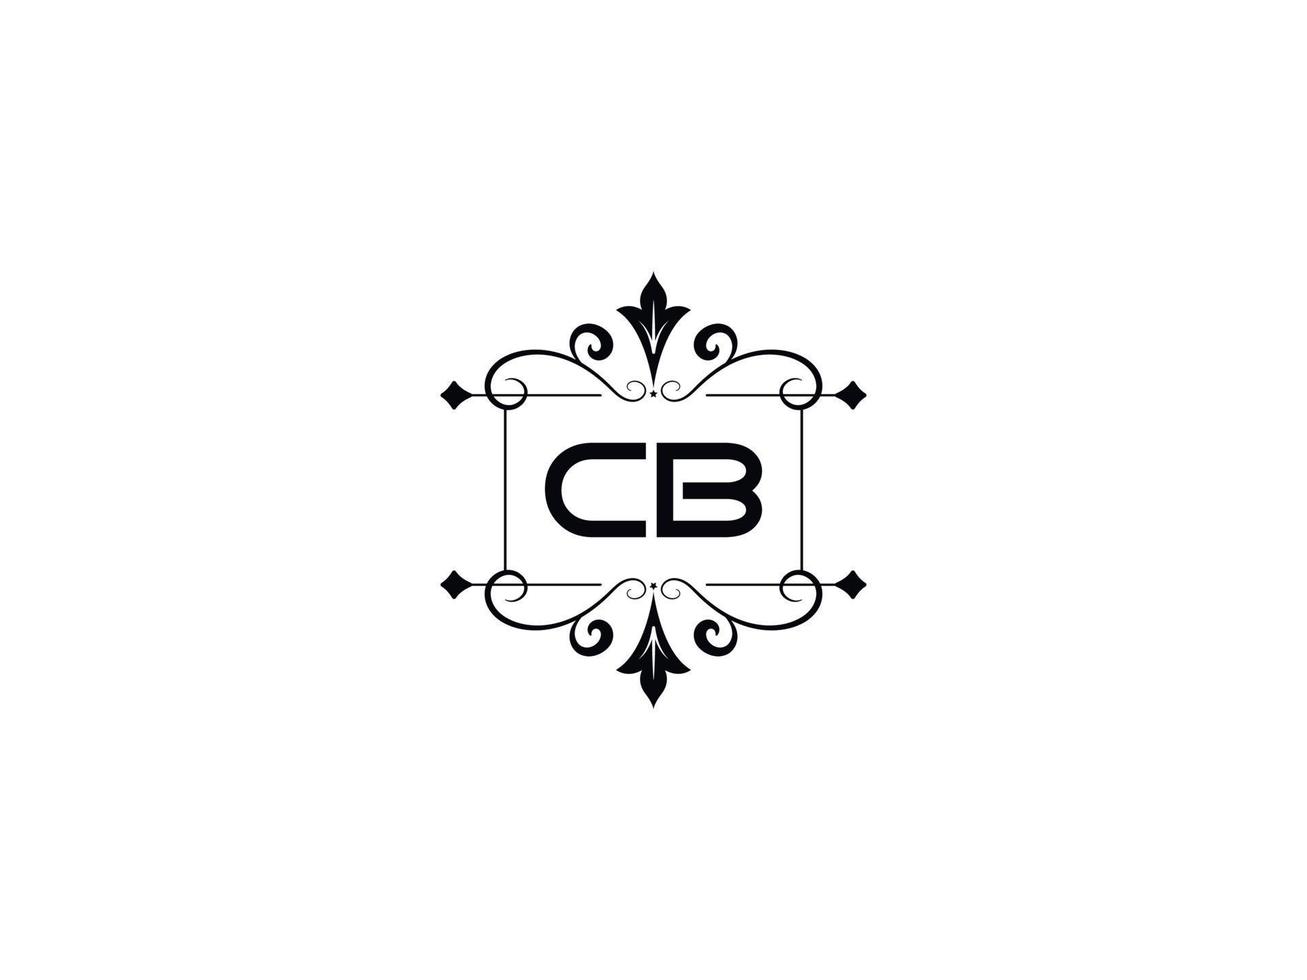 Creative Cb Logo Image, Monogram Cb Luxury Letter Design vector